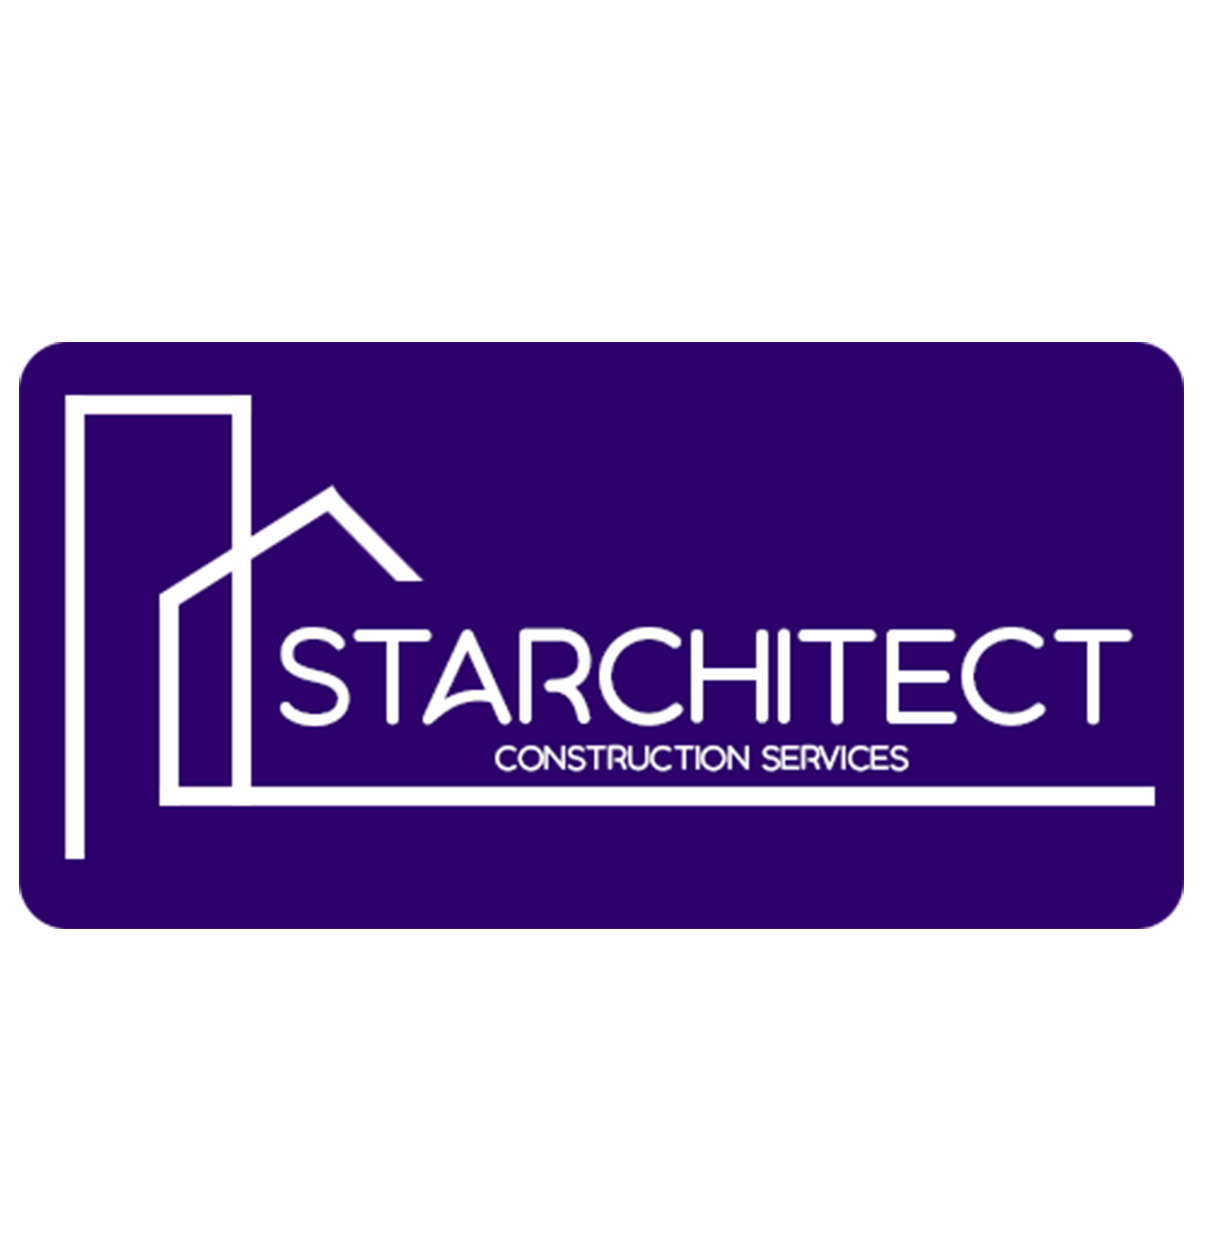 Starchitect